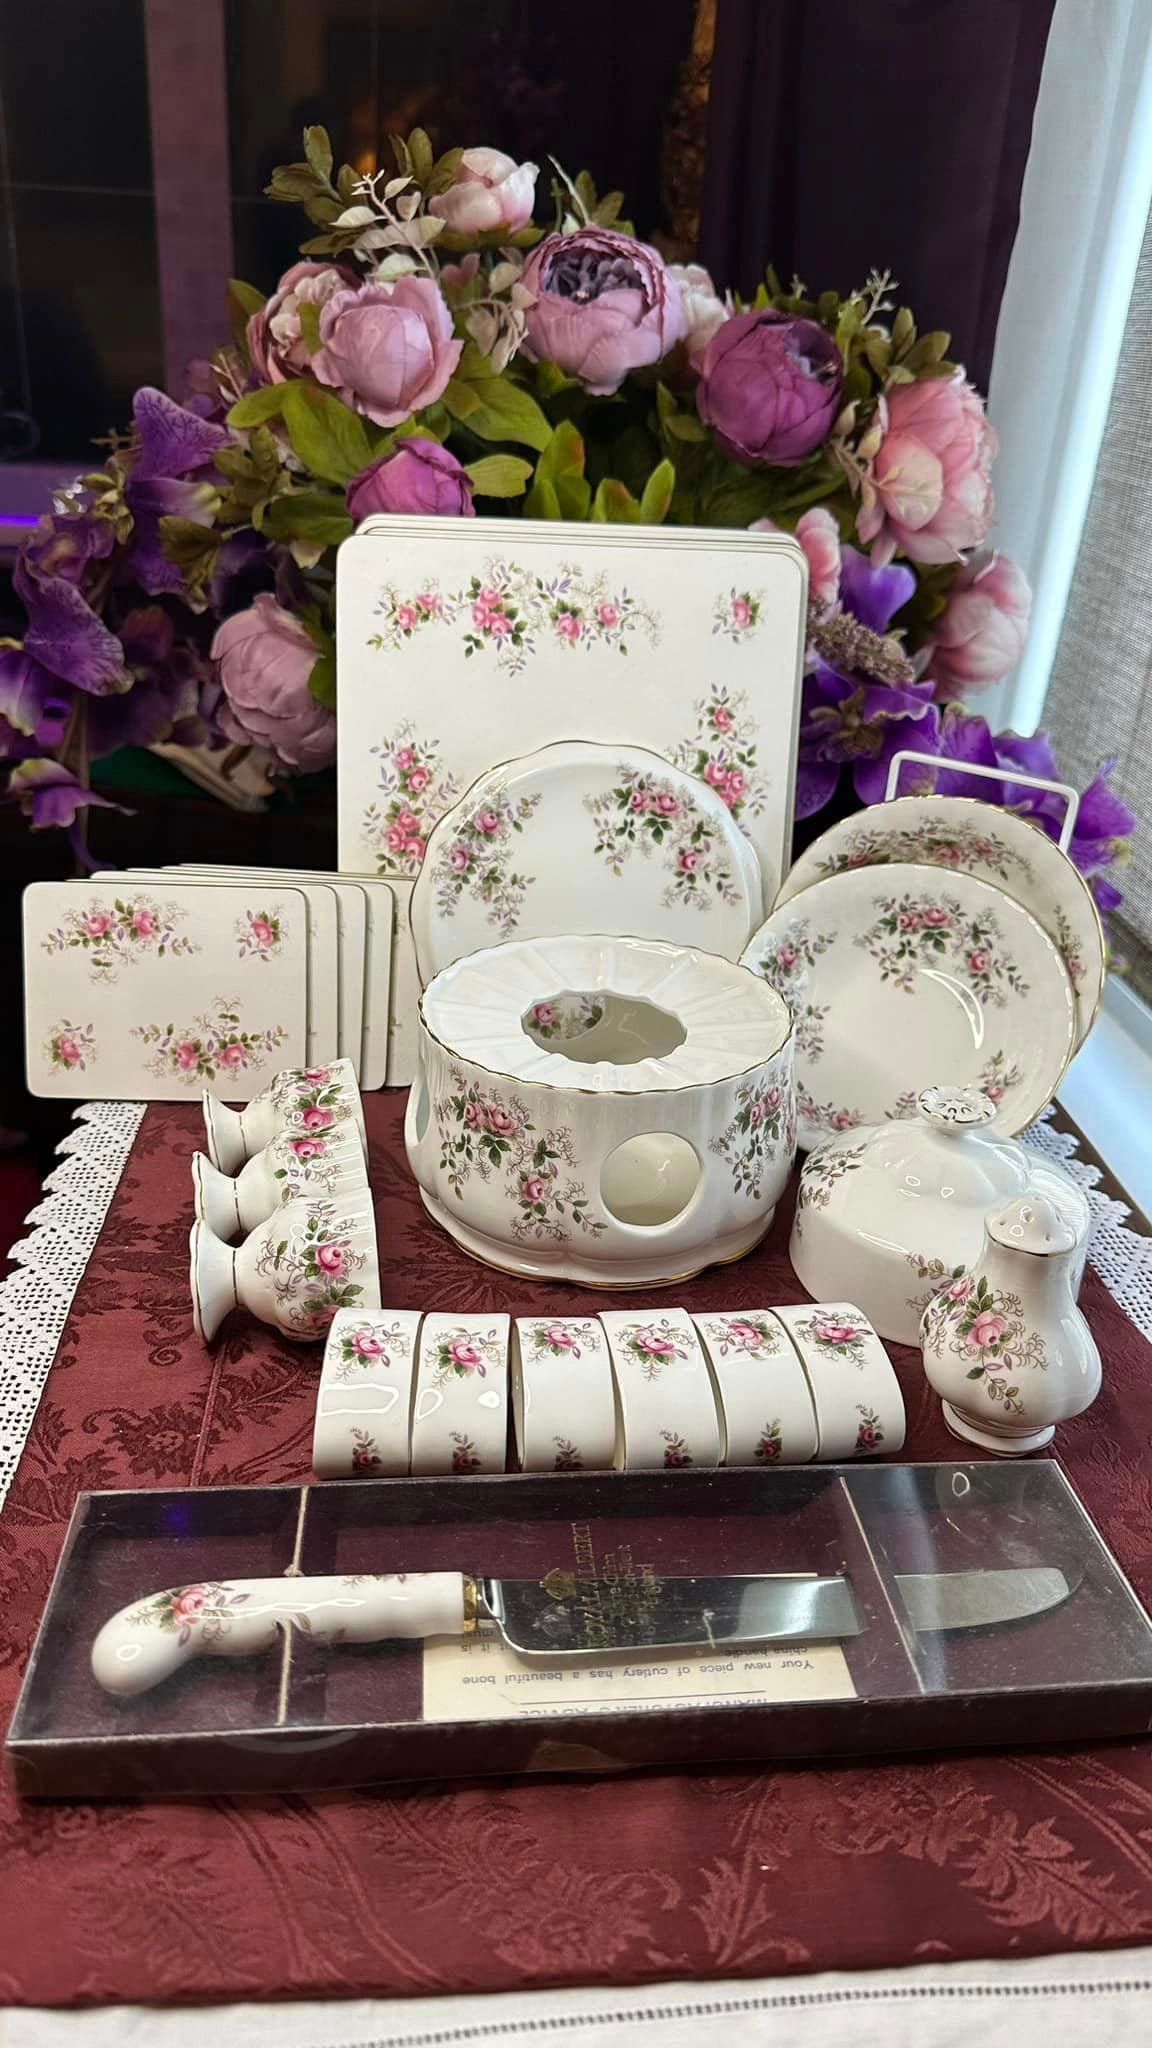 Floral Ceramic Teapot, Handmade Pottery Tea Pot, Extra Large Purple  Lavender Floral, Unique Stoneware, Housewarming Gift for Tea Lovers 